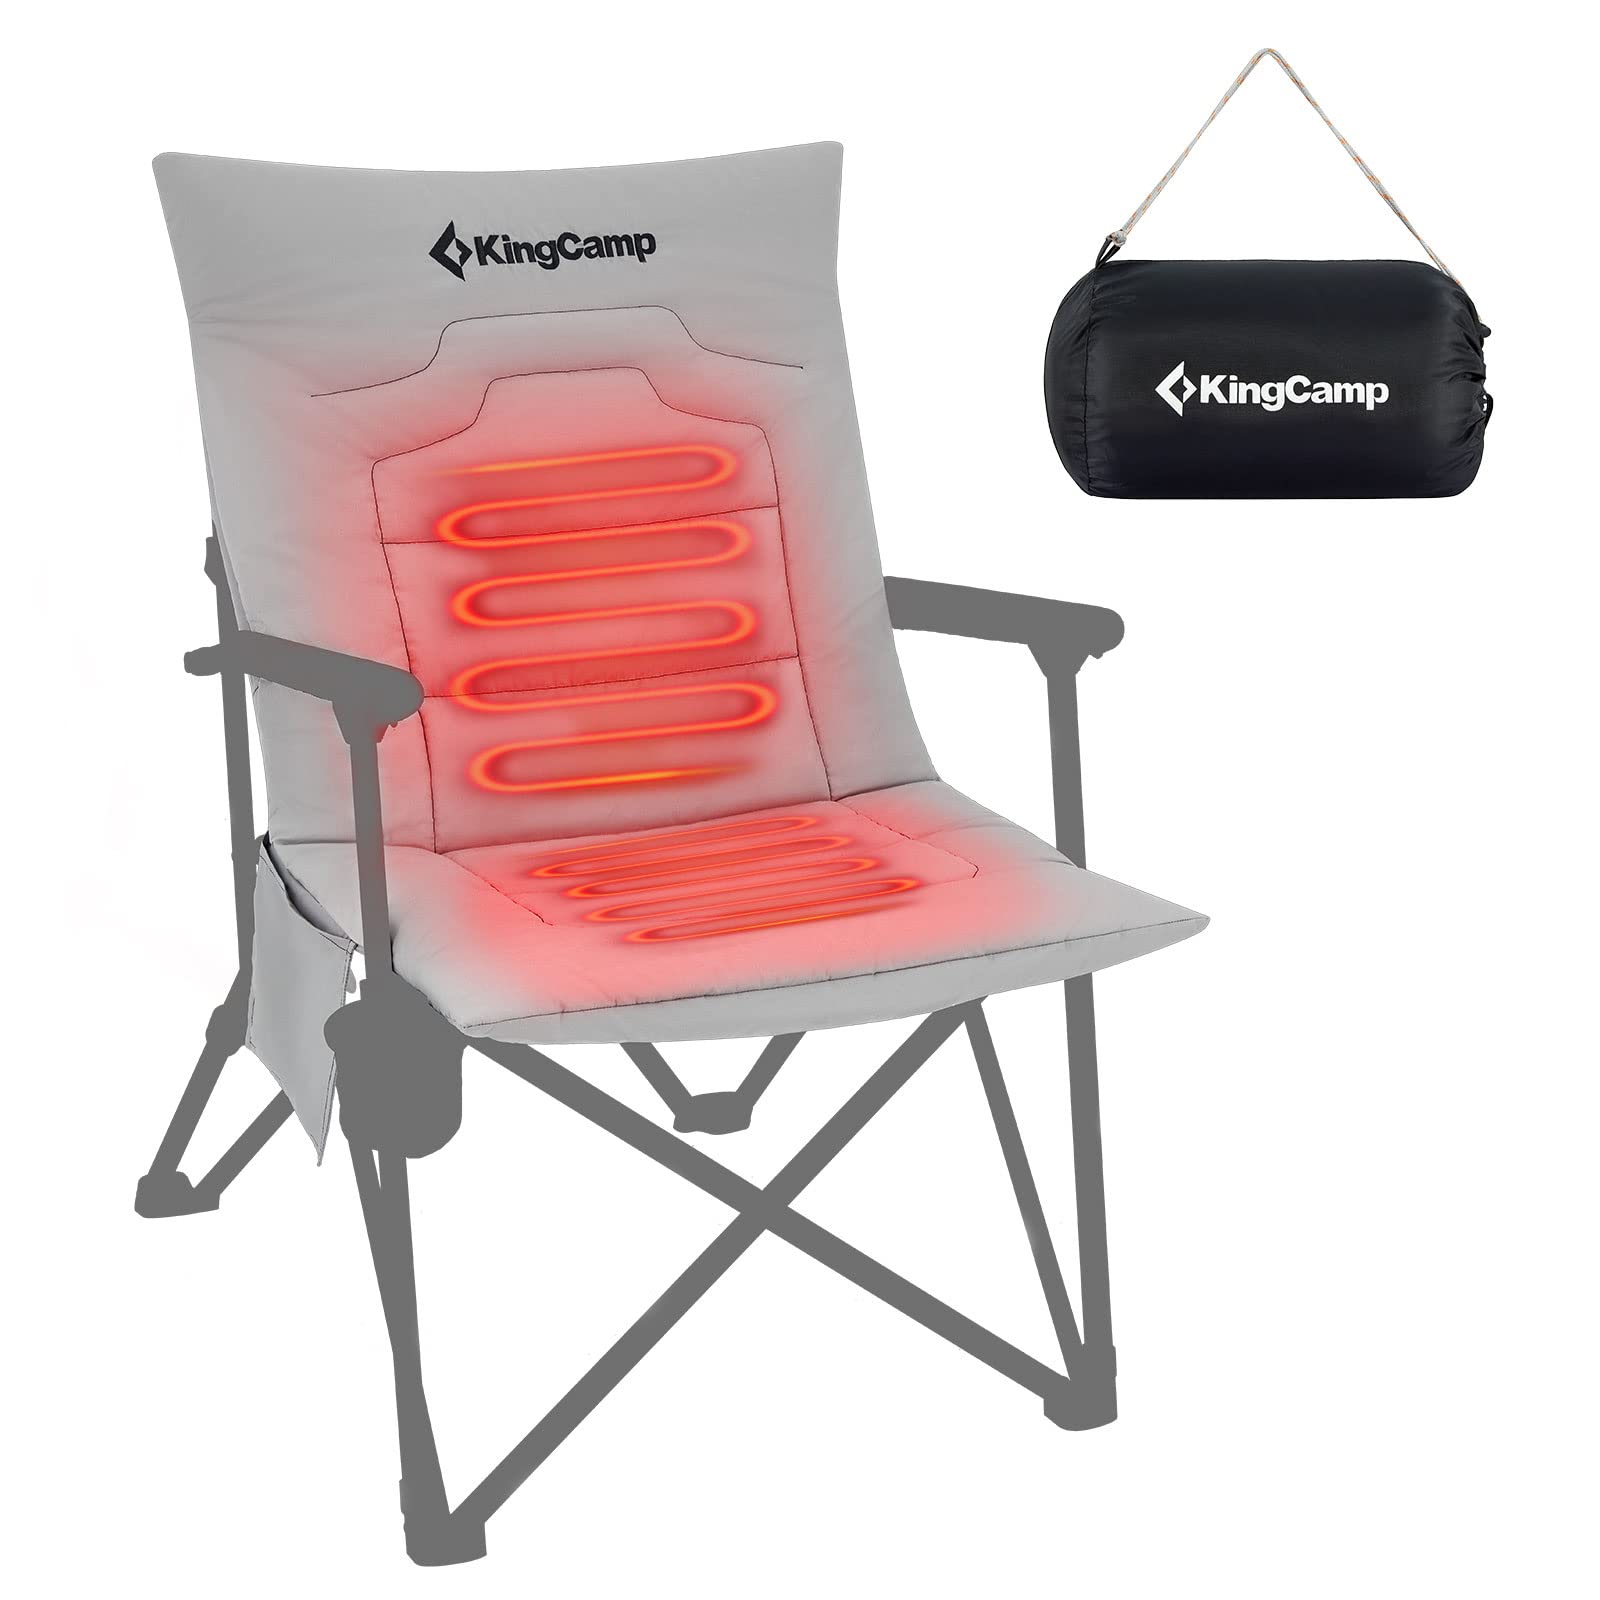 KingCamp Heated Chair Cushion